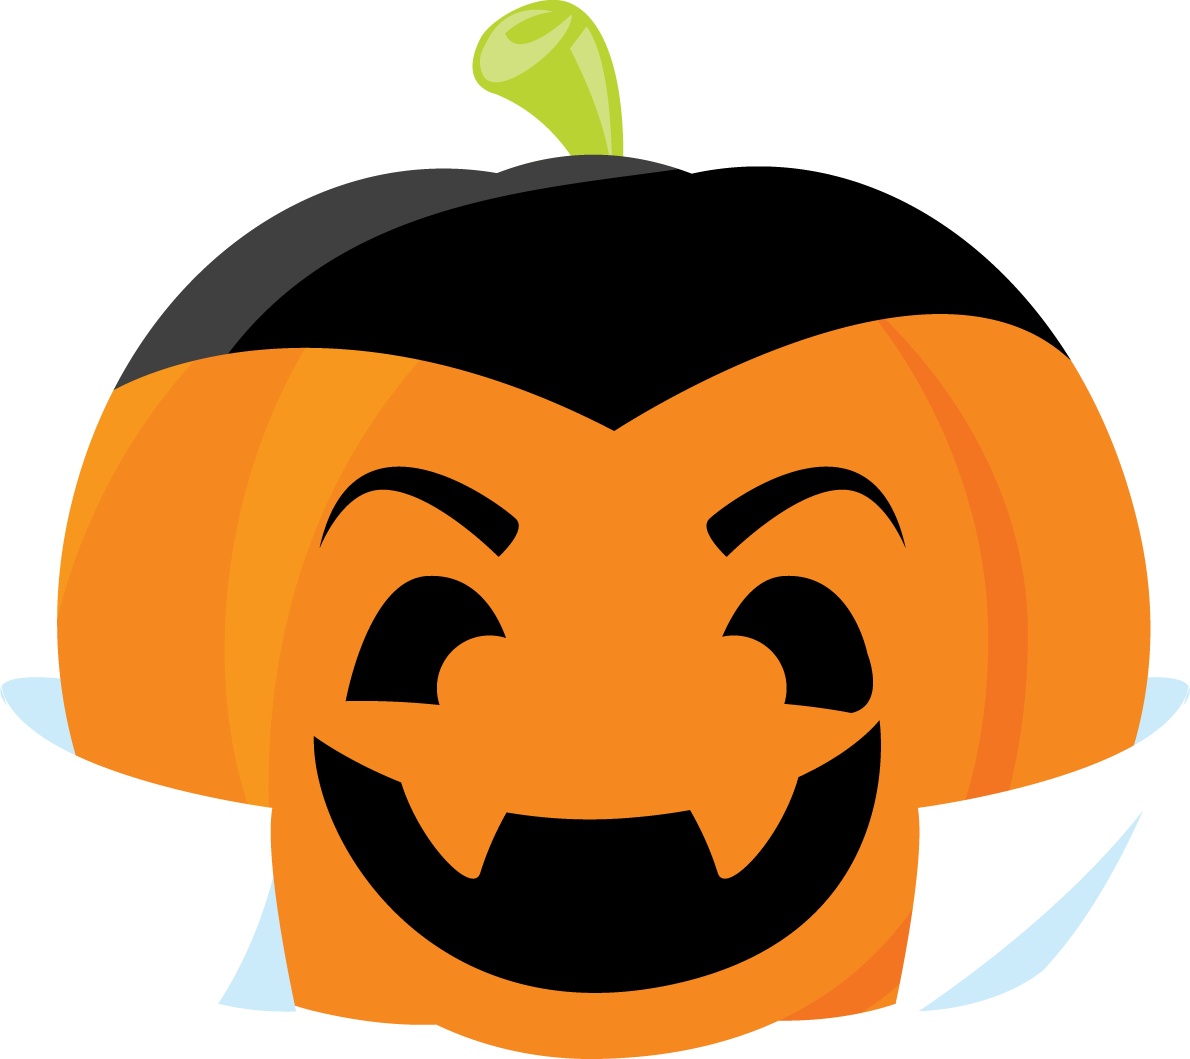 Halloween Pumpkin Clipart. - Oh My Fiesta! in english